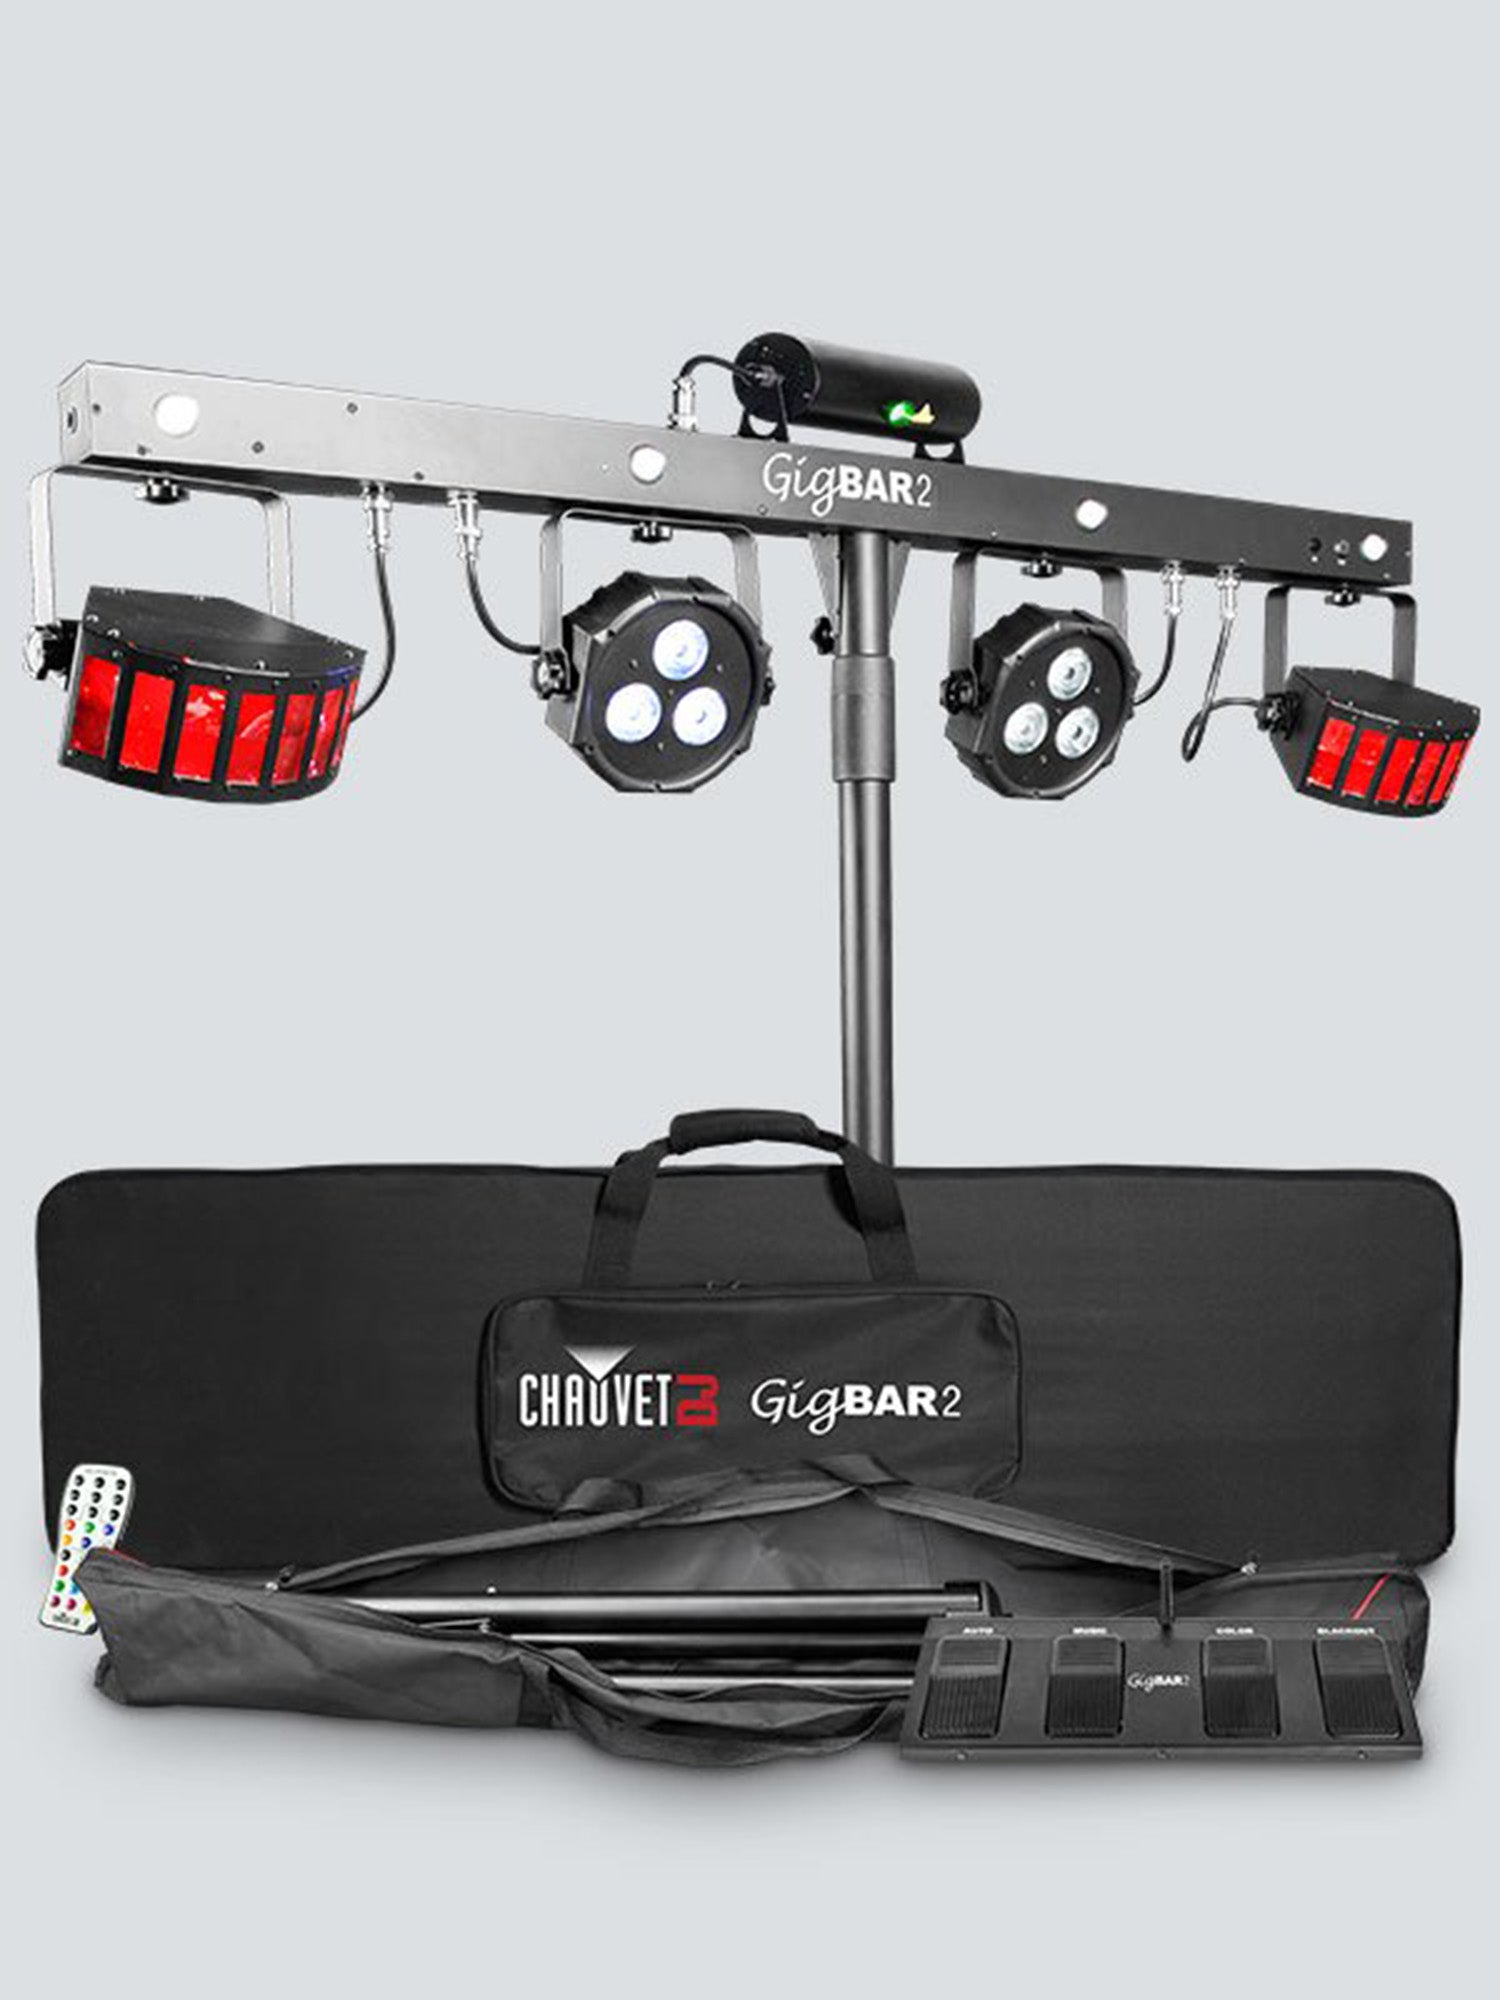 Chauvet DJ GIGBAR2 4-in-1 Lighting System with Stand - Hollywood DJ